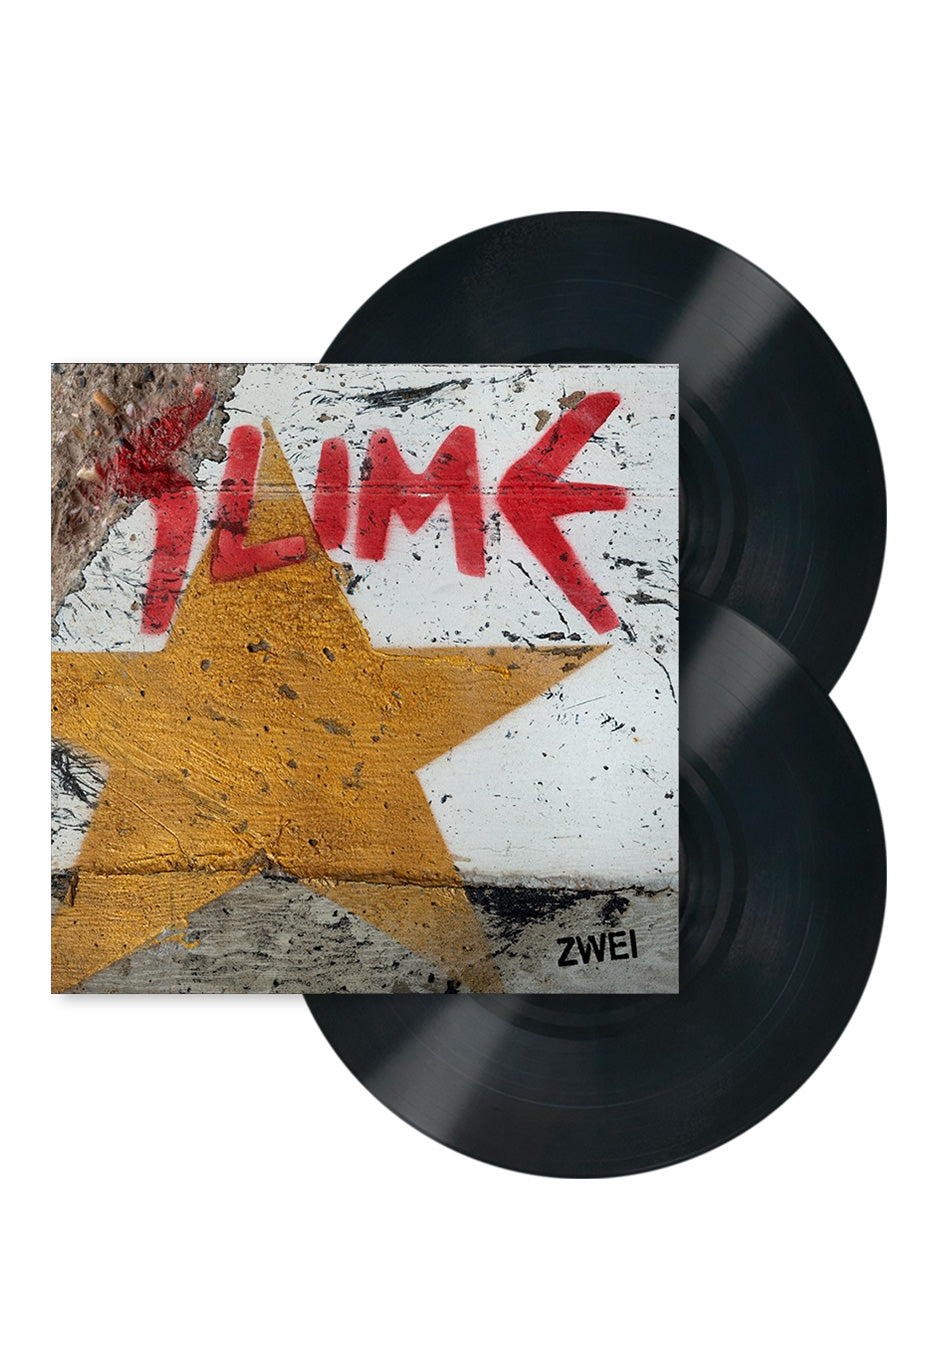 Slime - Zwei - 2 Vinyl